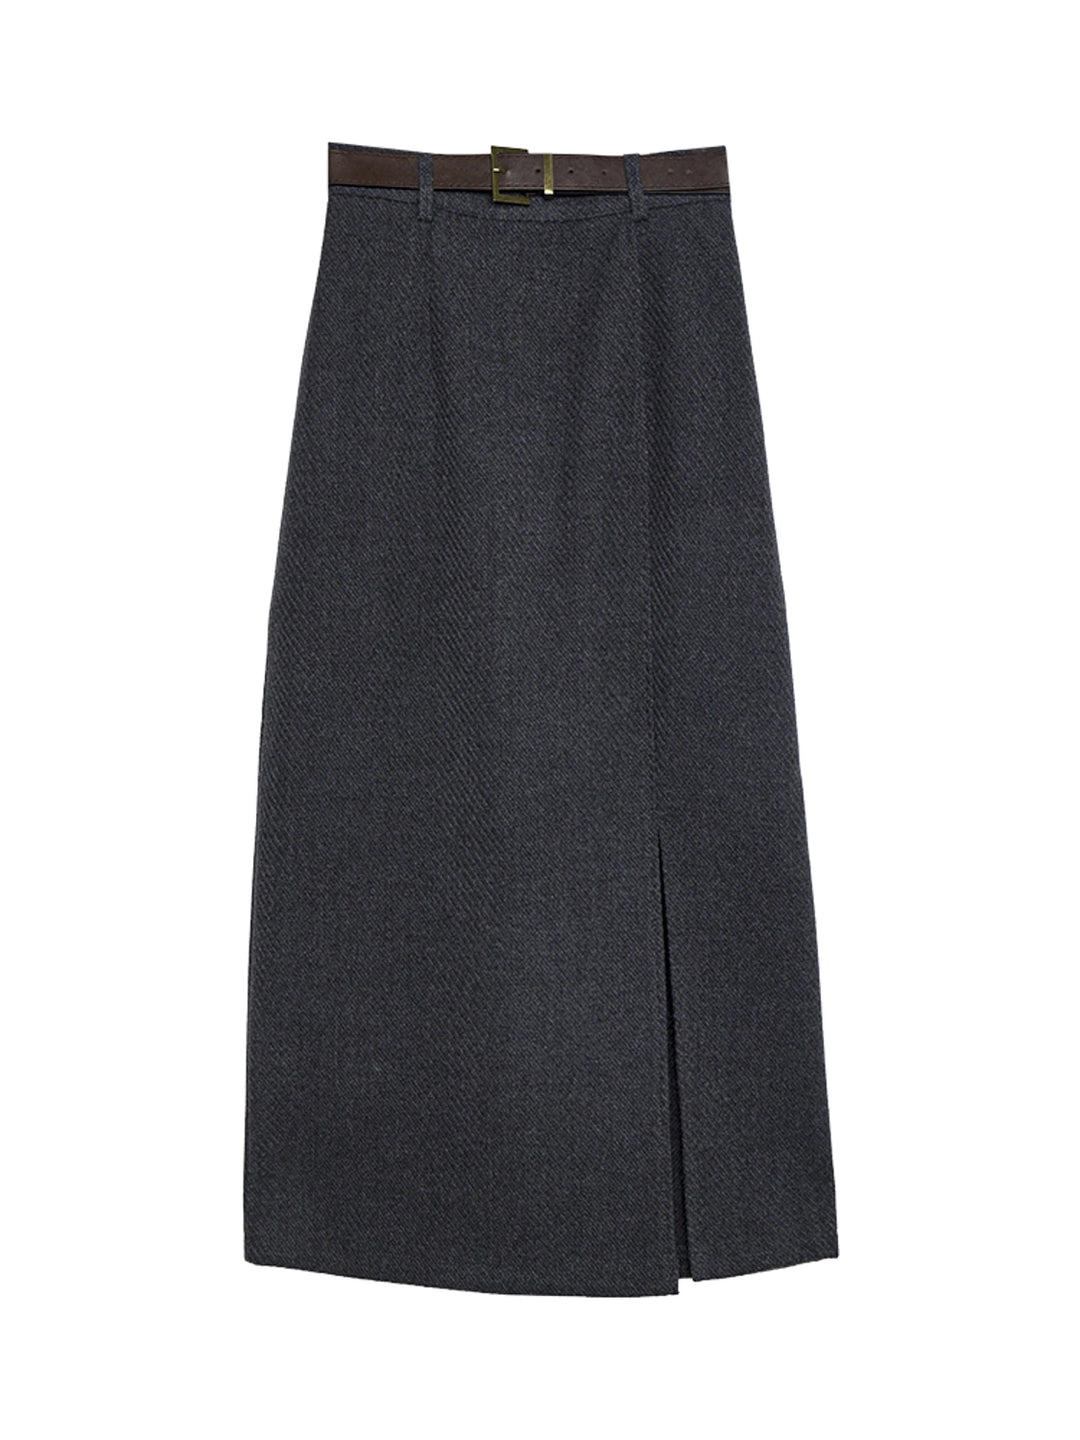 Stylish Women's Midi Skirt with Asymmetrical Hem and Belt Detail